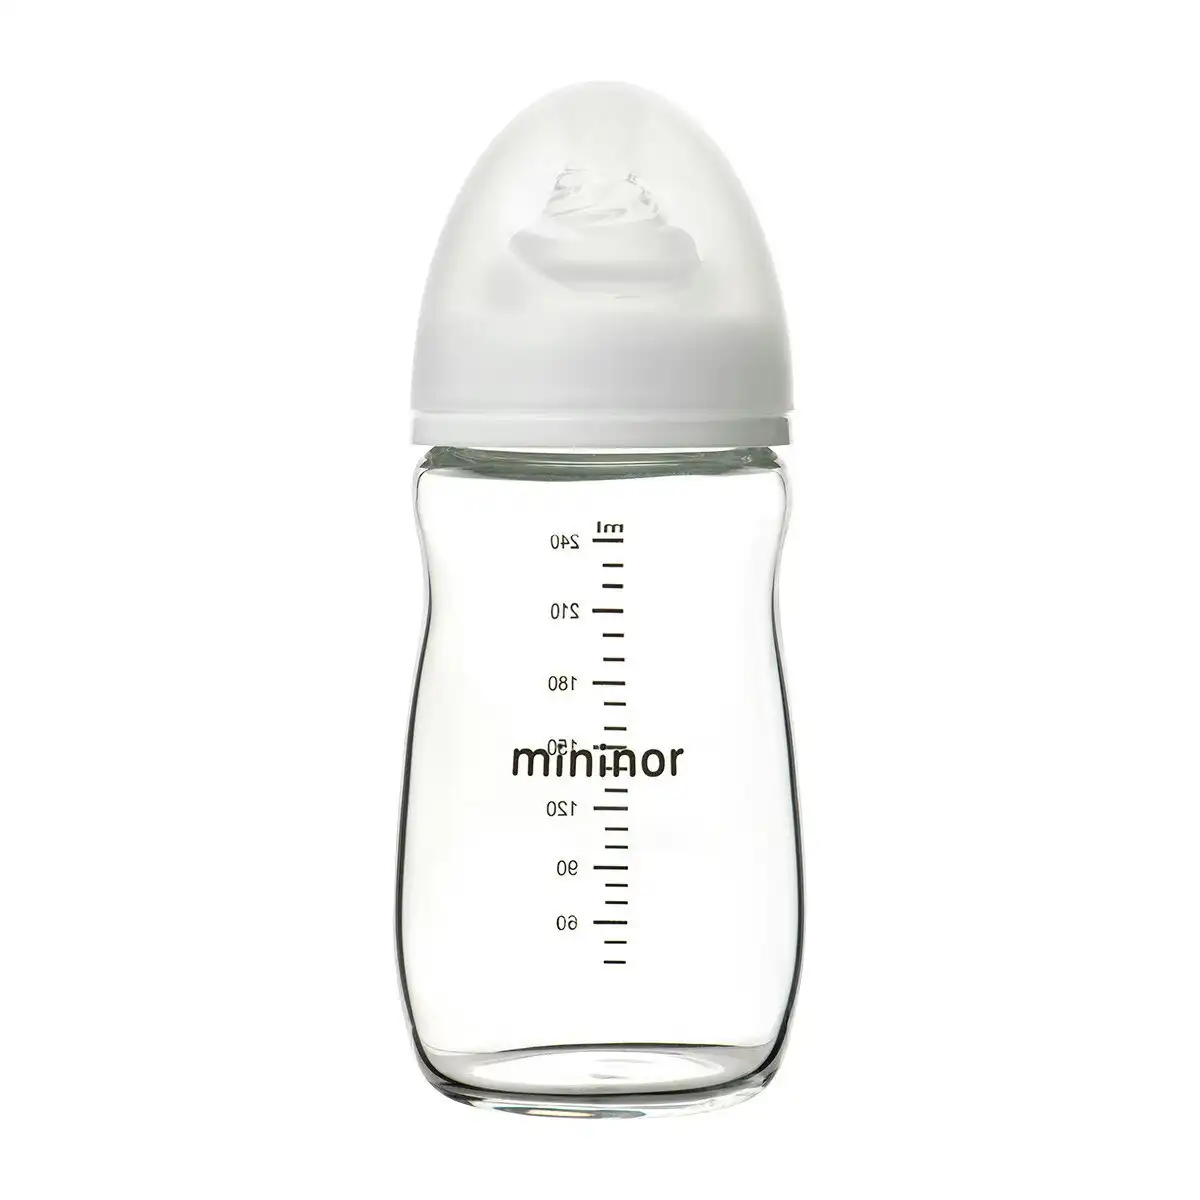 Mininor Baby/Infant 240ml Glass Feeding Bottle w/ Anti-Colic Silicone Teat 3m+